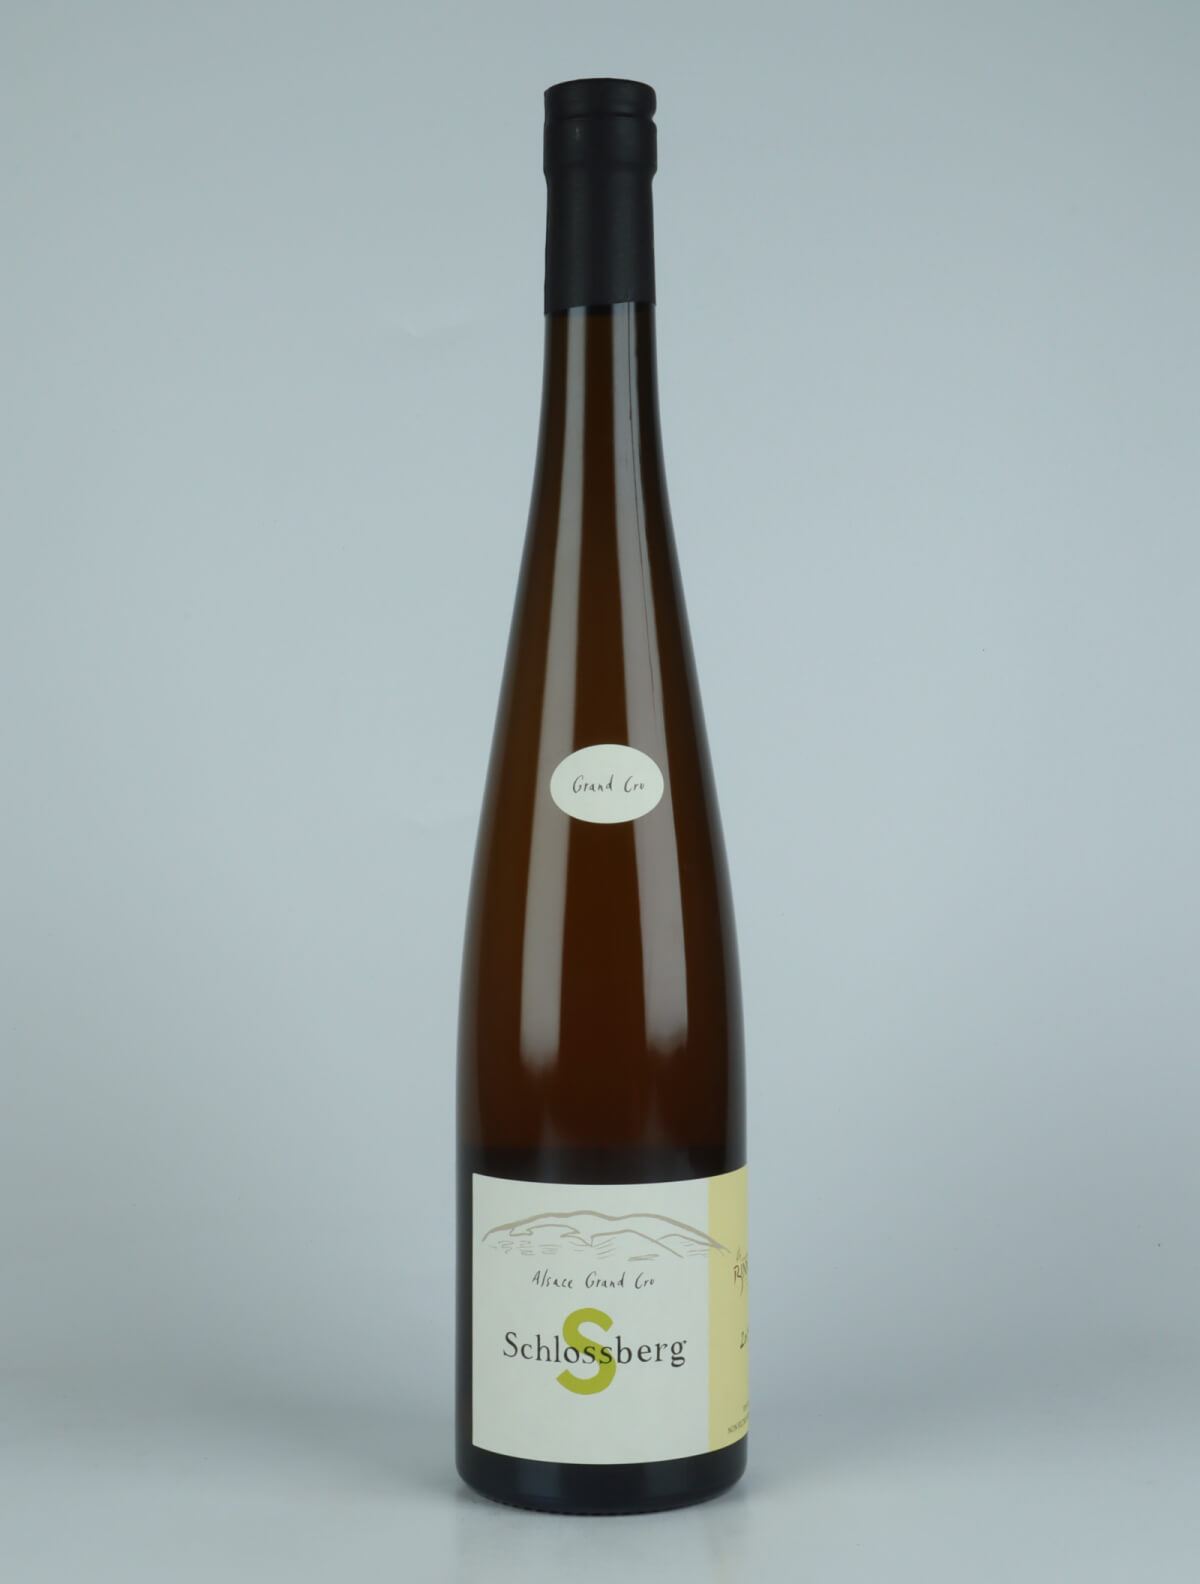 A bottle 2019 Riesling Grand Cru - Schlossberg White wine from Domaine Christian Binner, Alsace in France